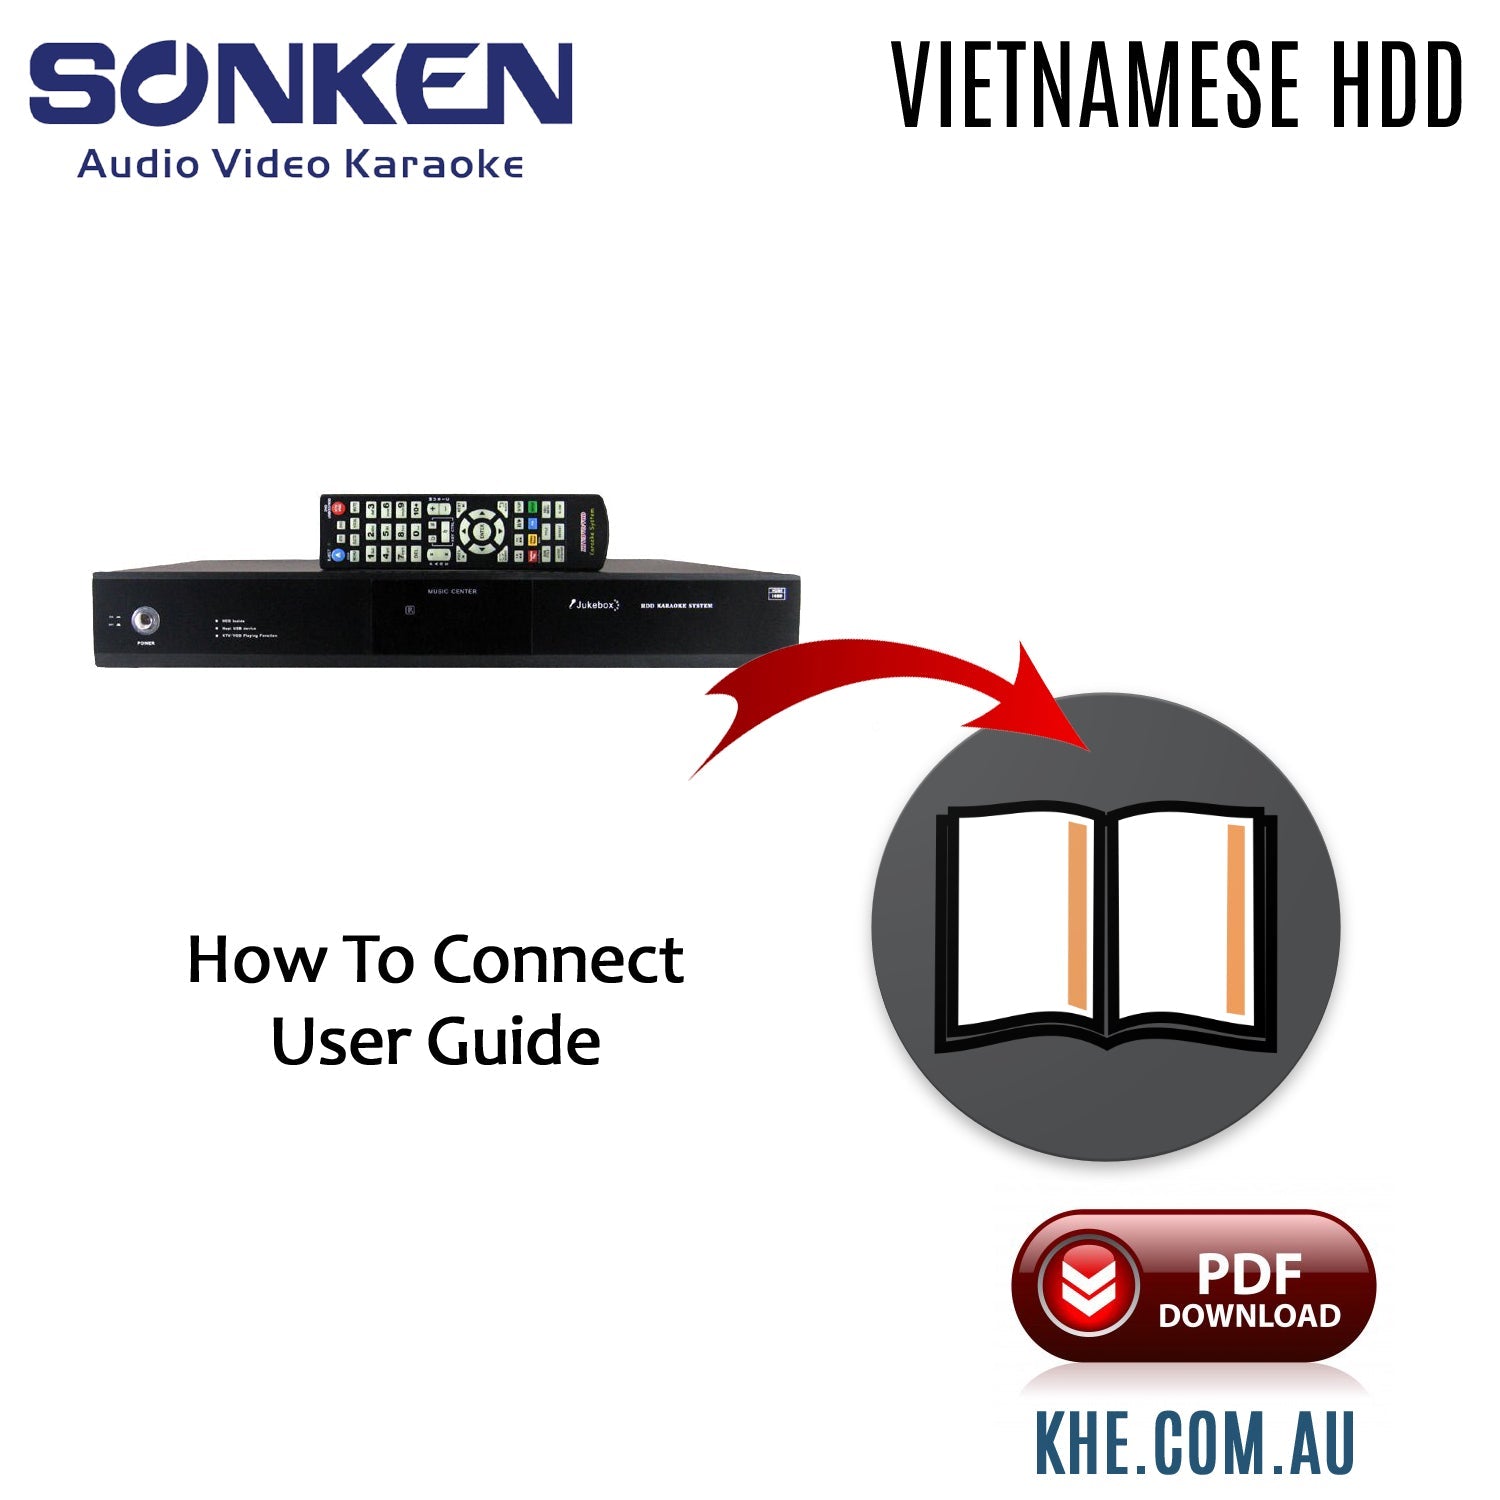 Sonken Vietnamese Karaoke HDD Systems - Original User Guide - Karaoke Home Entertainment